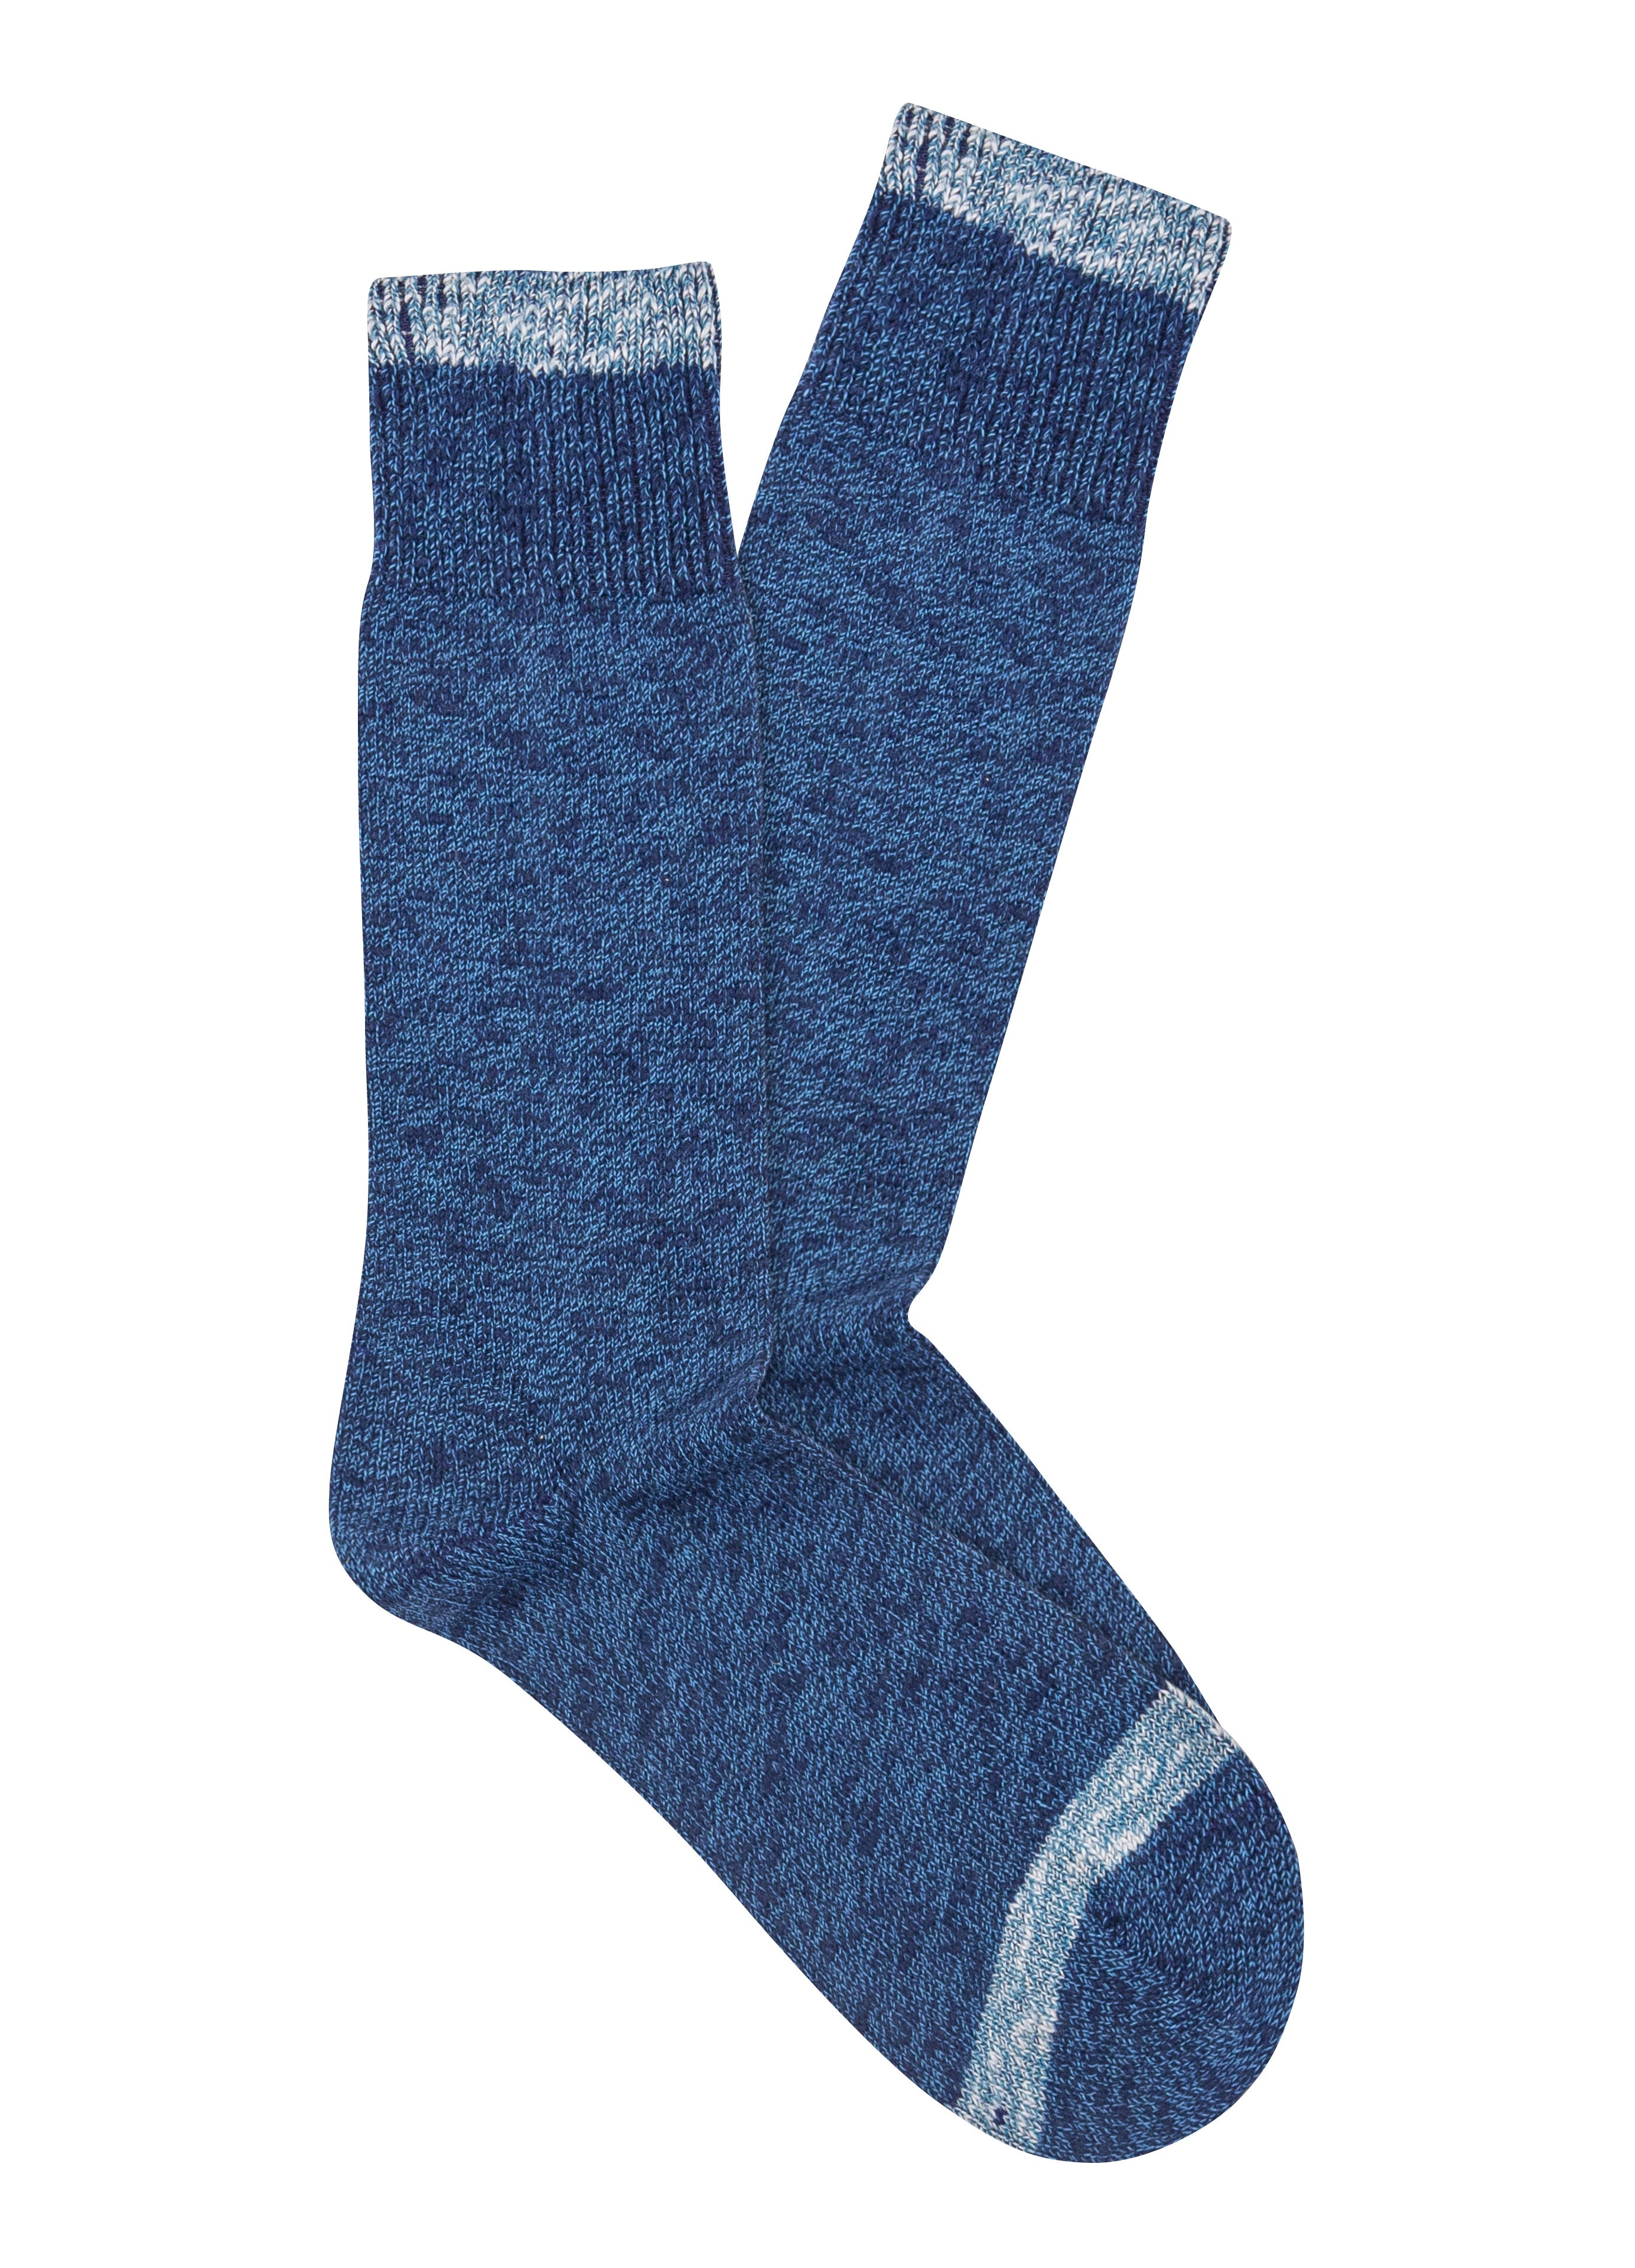 Marcoliani Ocean Blue Marbled Contrast Tip Socks